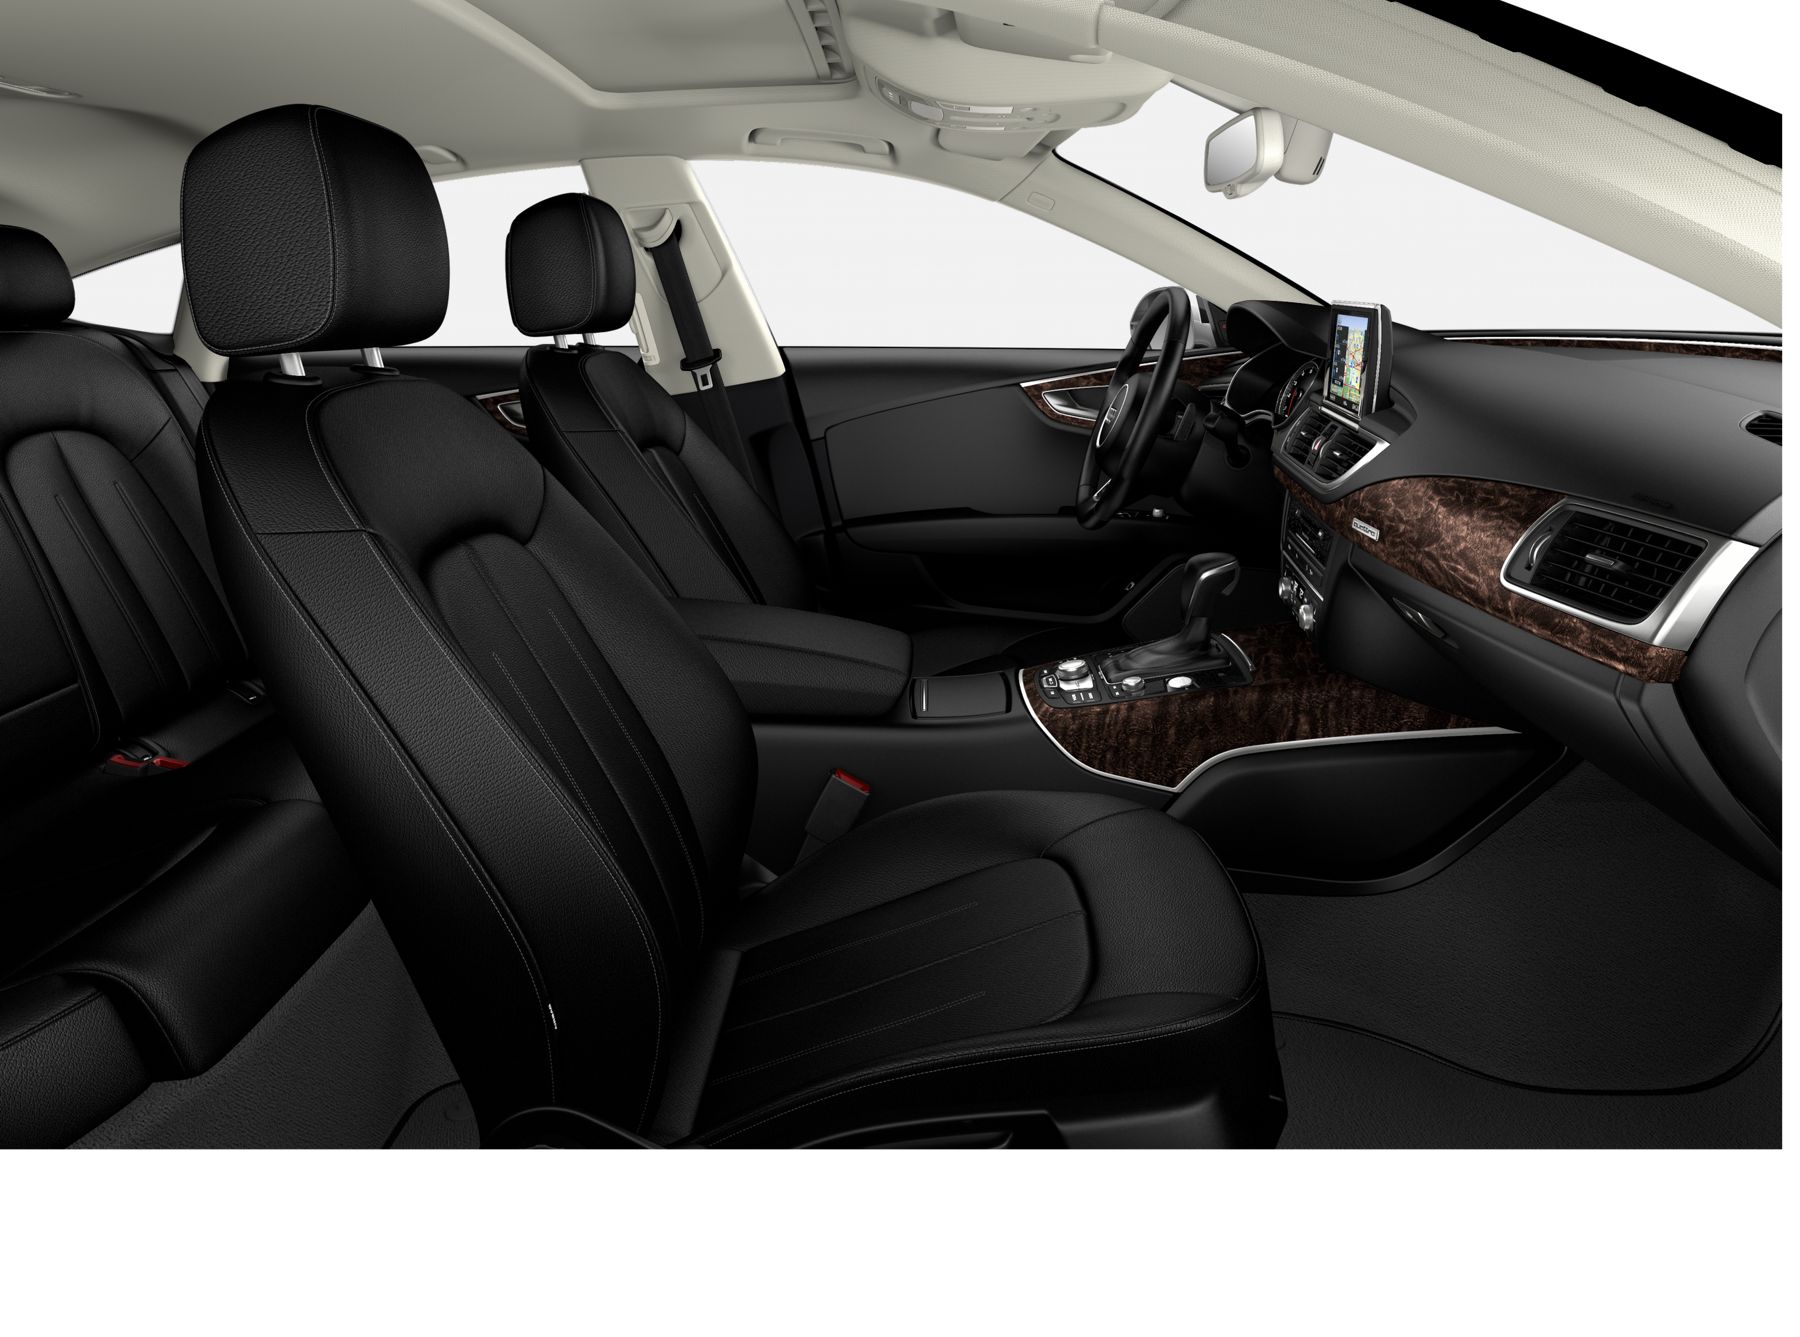 Audi A7 Se Executive interior front cross view